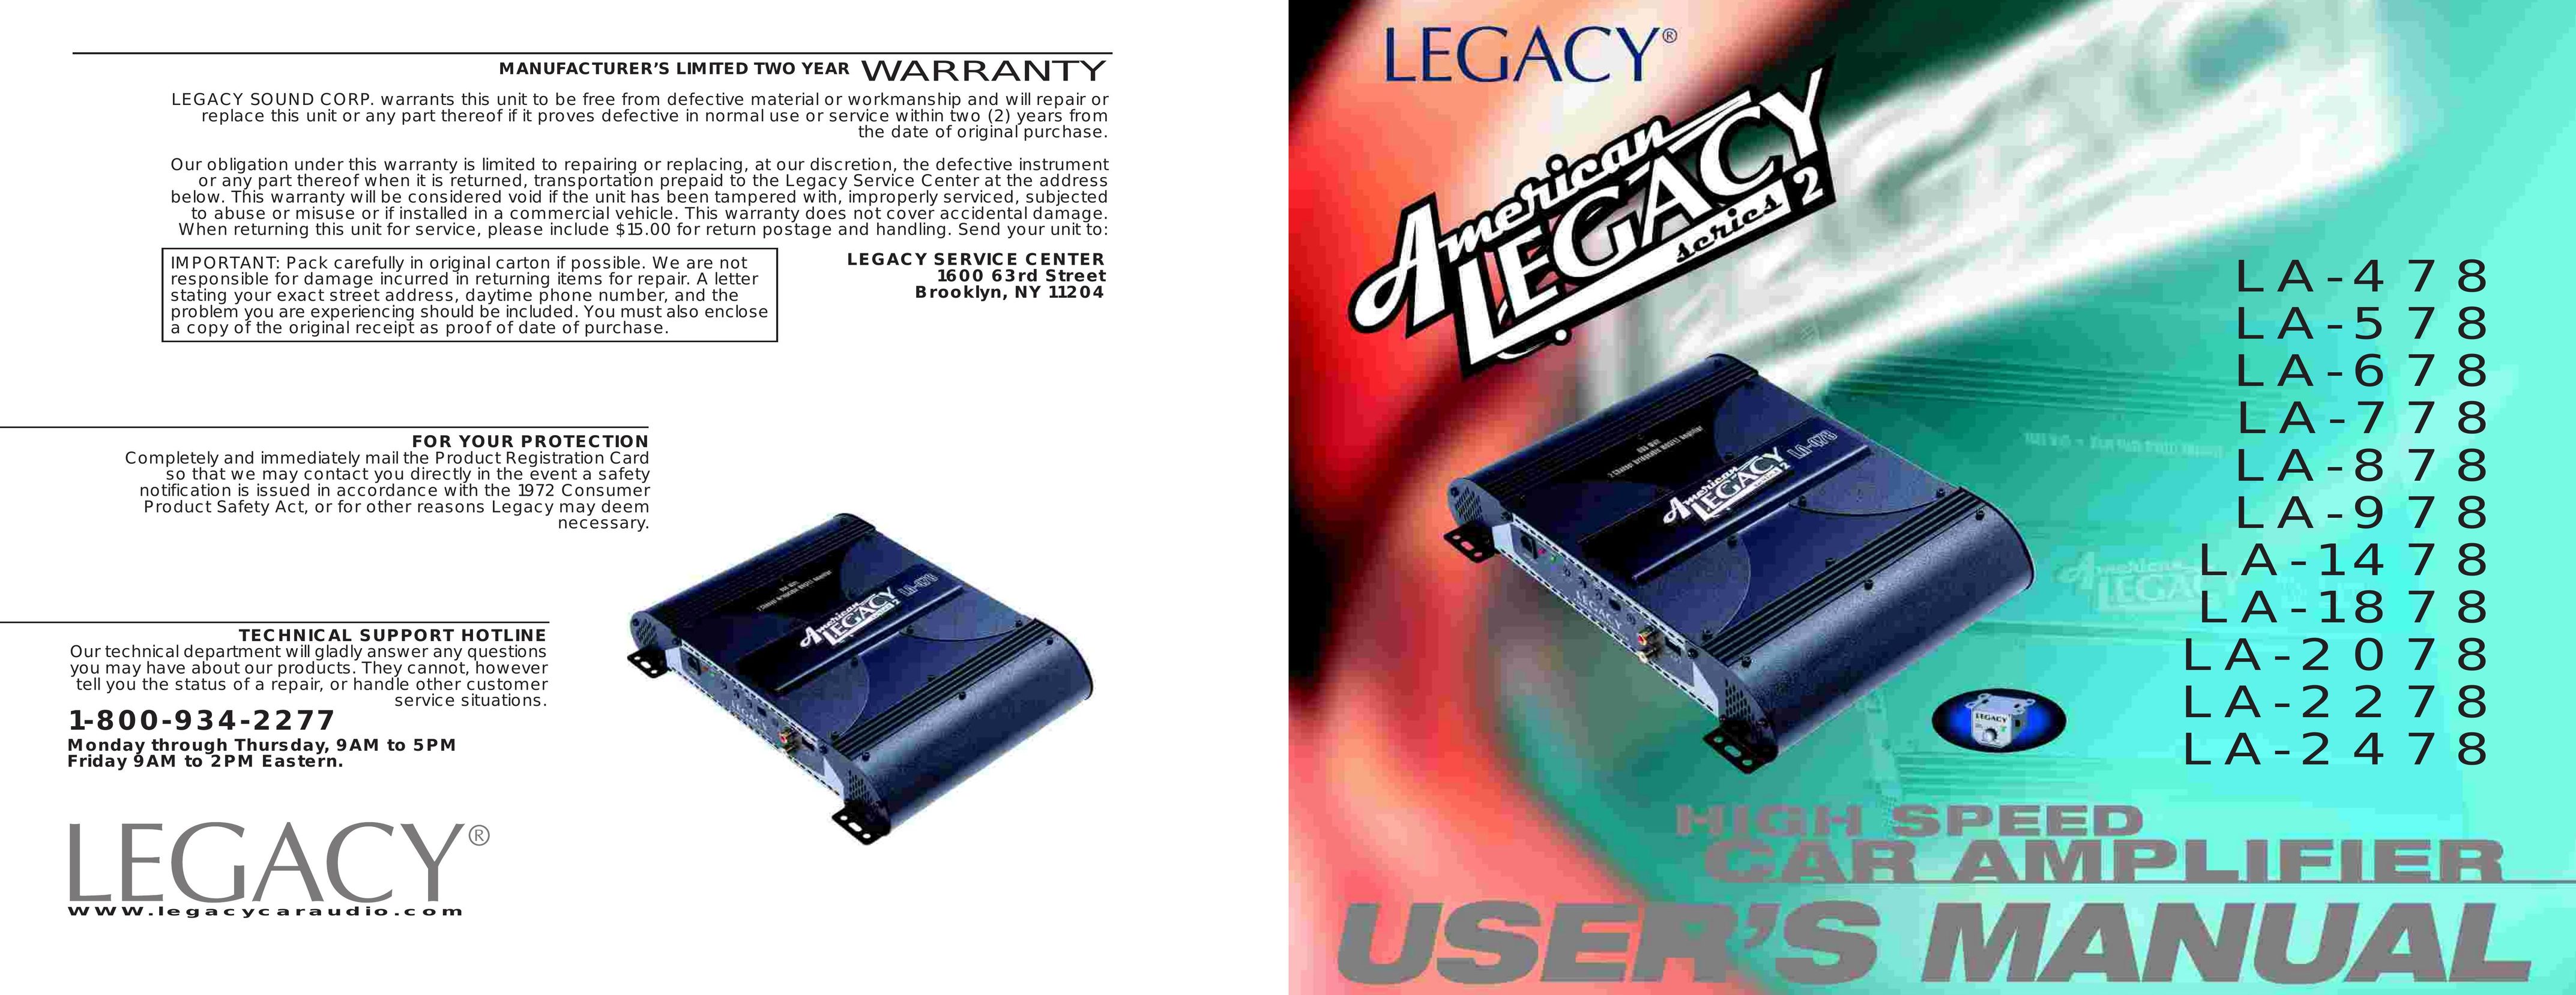 Legacy Car Audio LA-678 Car Amplifier User Manual